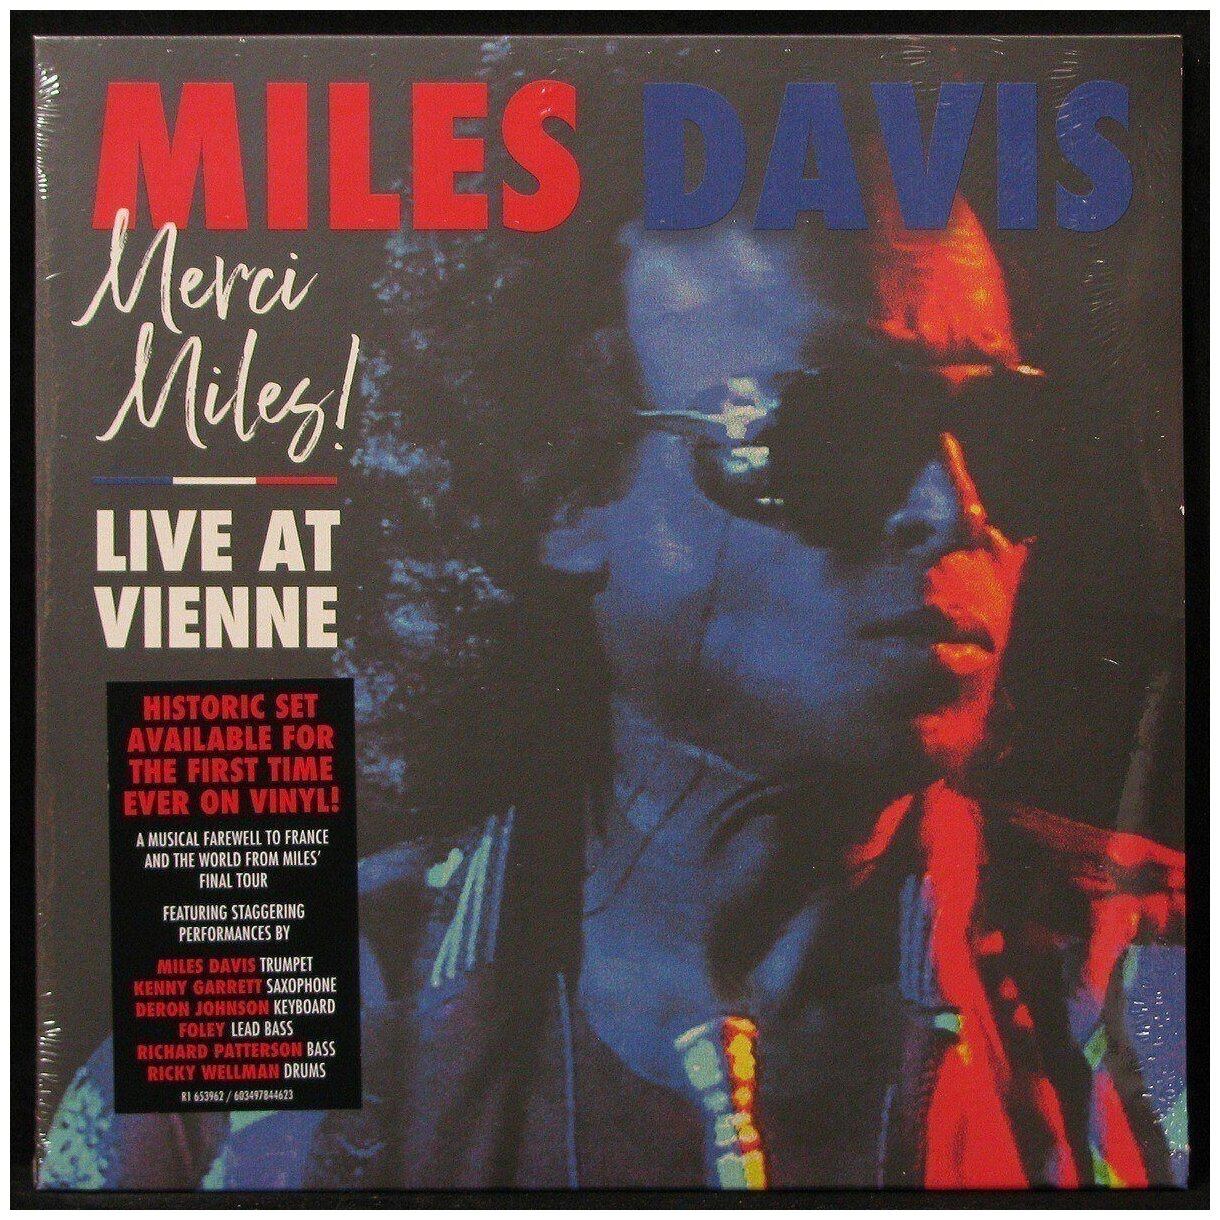 Виниловые пластинки, Warner Records, MILES DAVIS - Merci Miles! Live At Vienne (2LP)